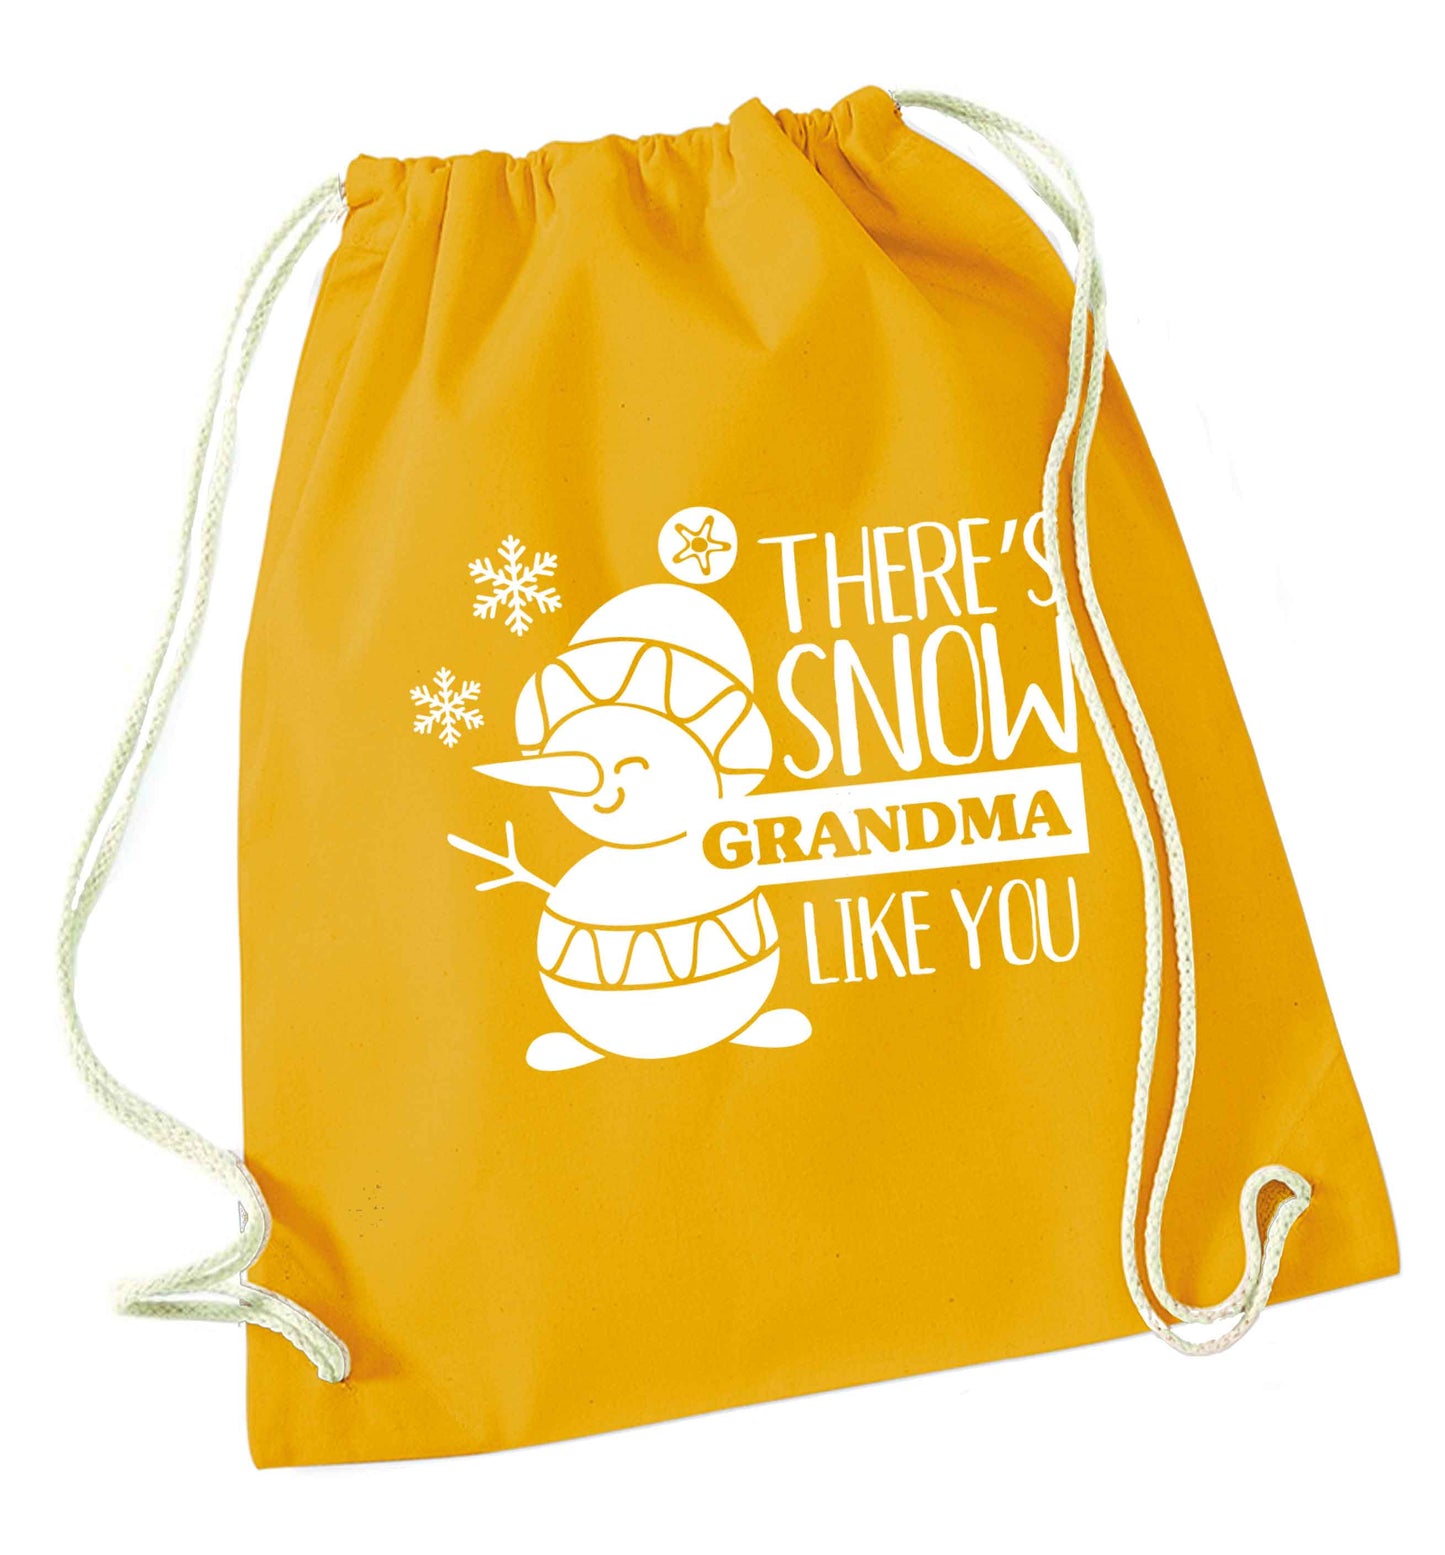 There's snow grandma like you mustard drawstring bag